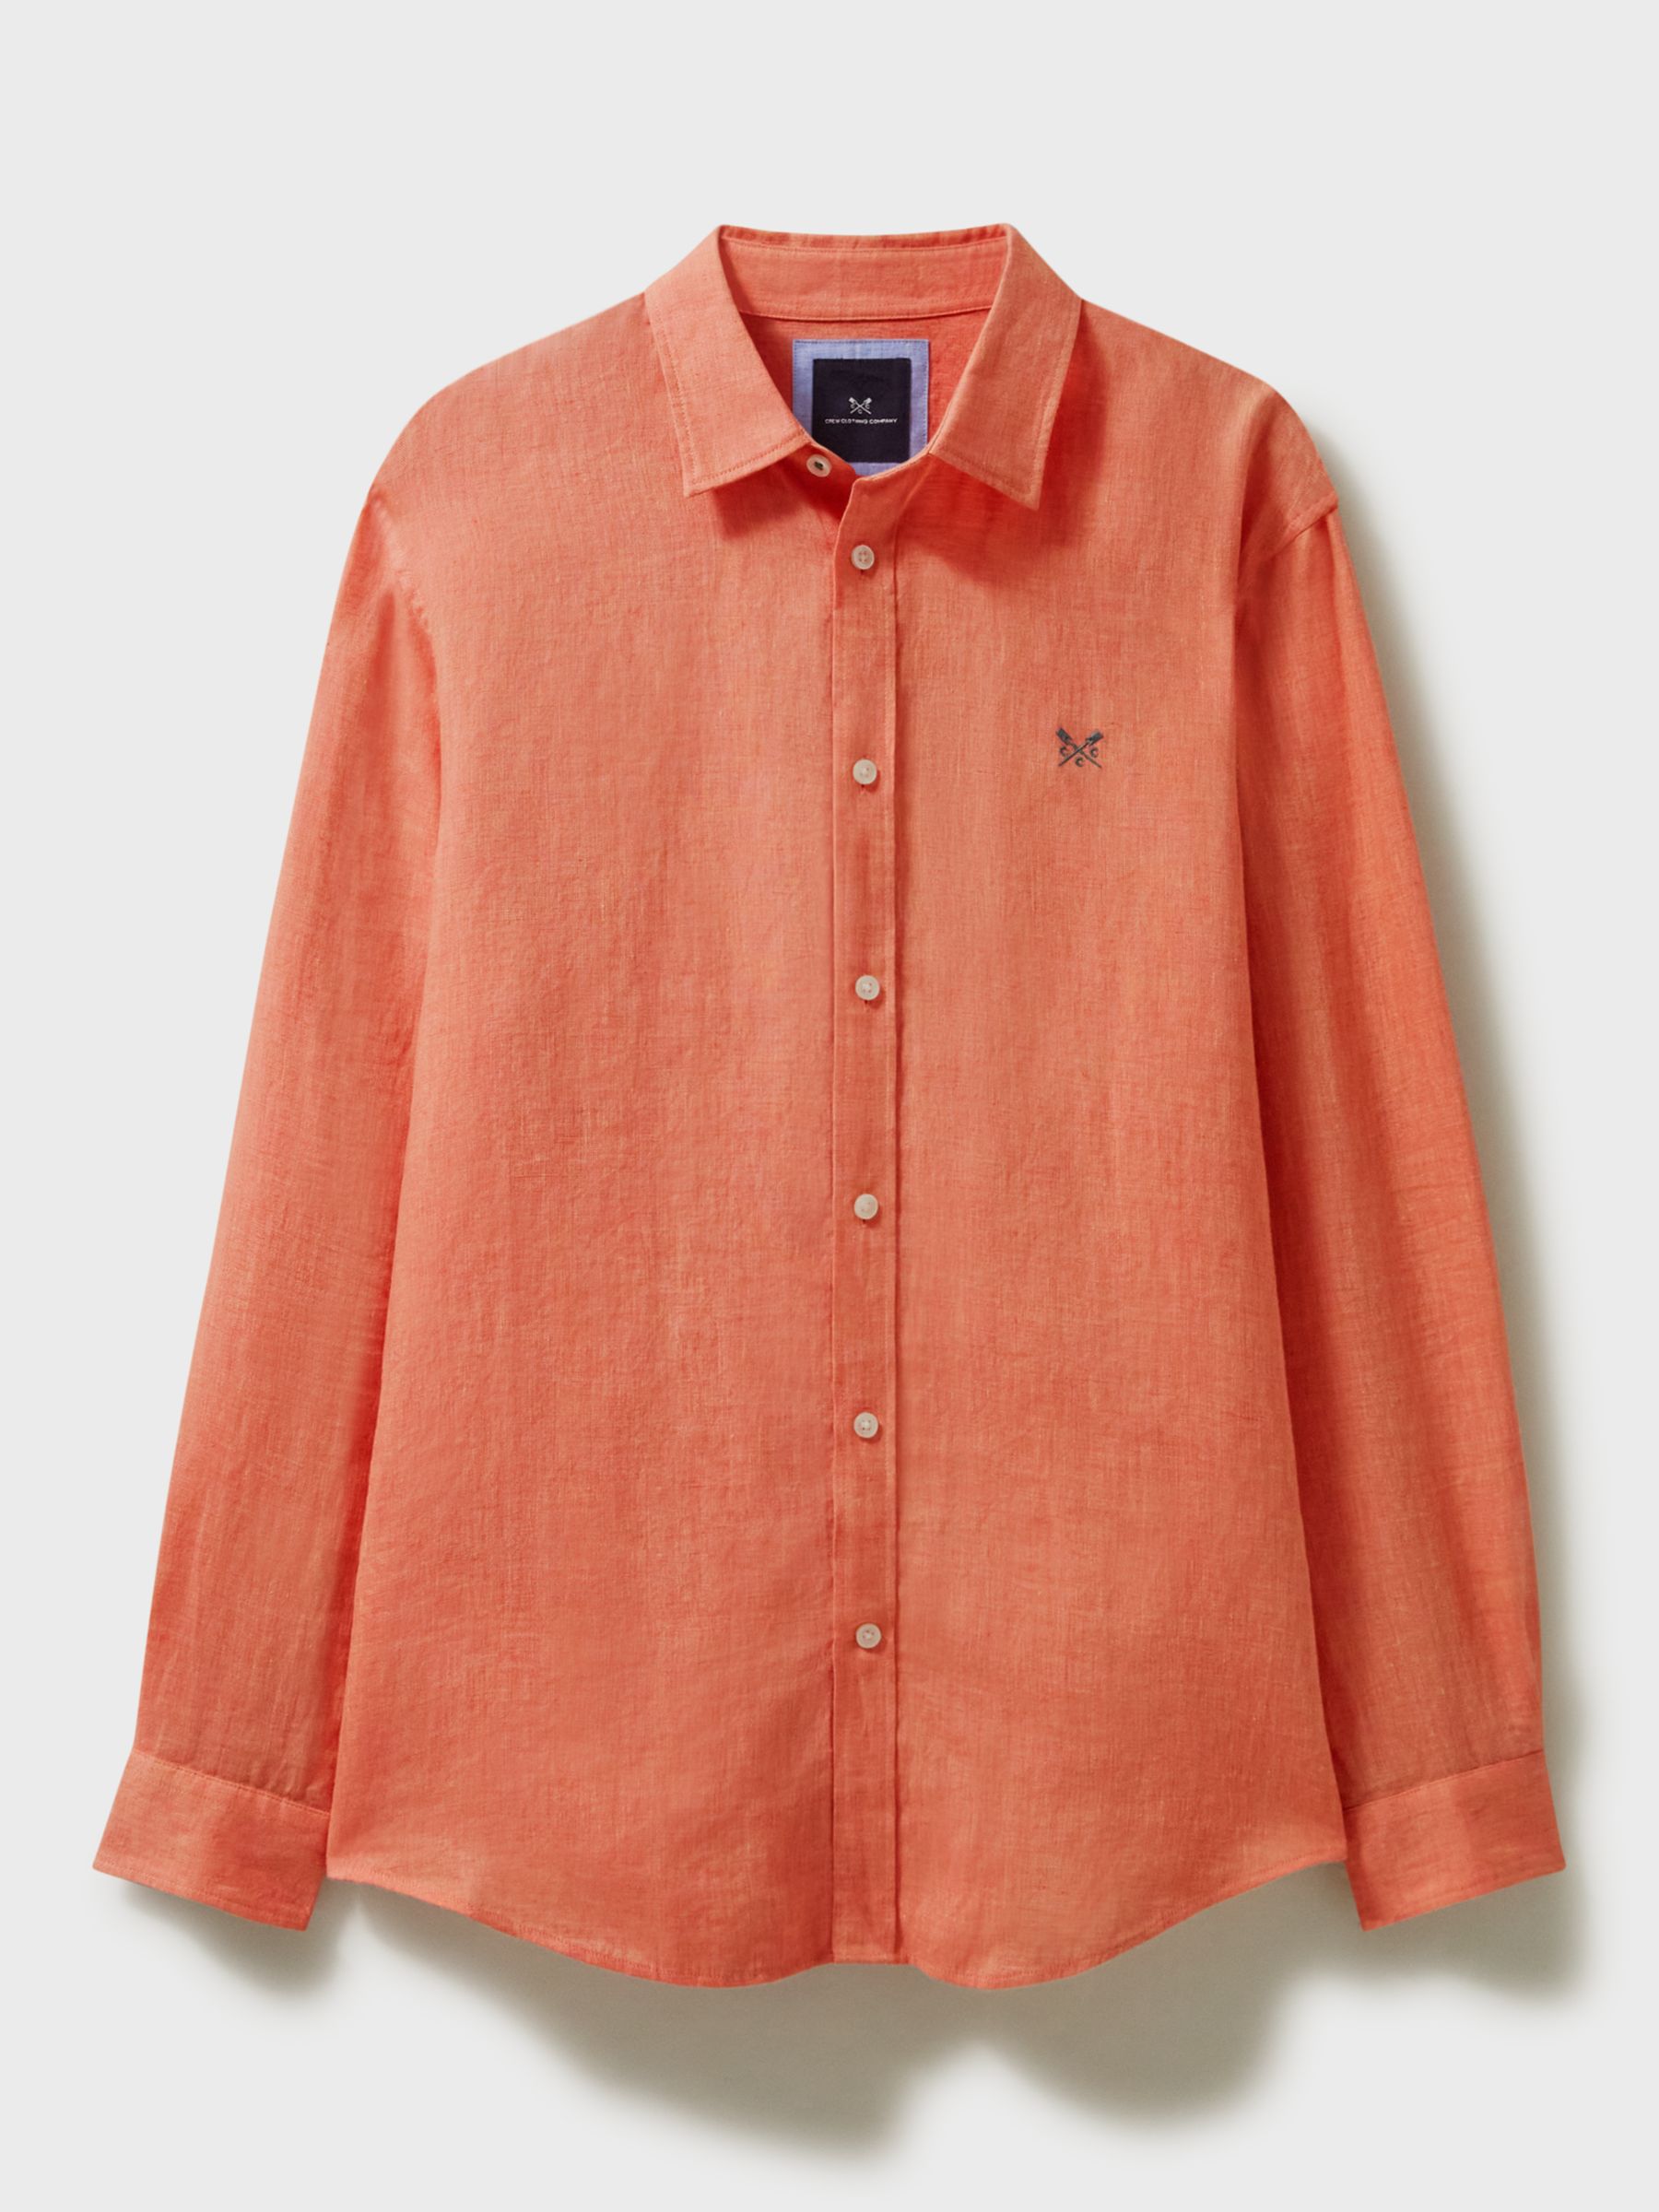 Crew Clothing Long Sleeve Linen Classic Shirt, Coral Orange, XS